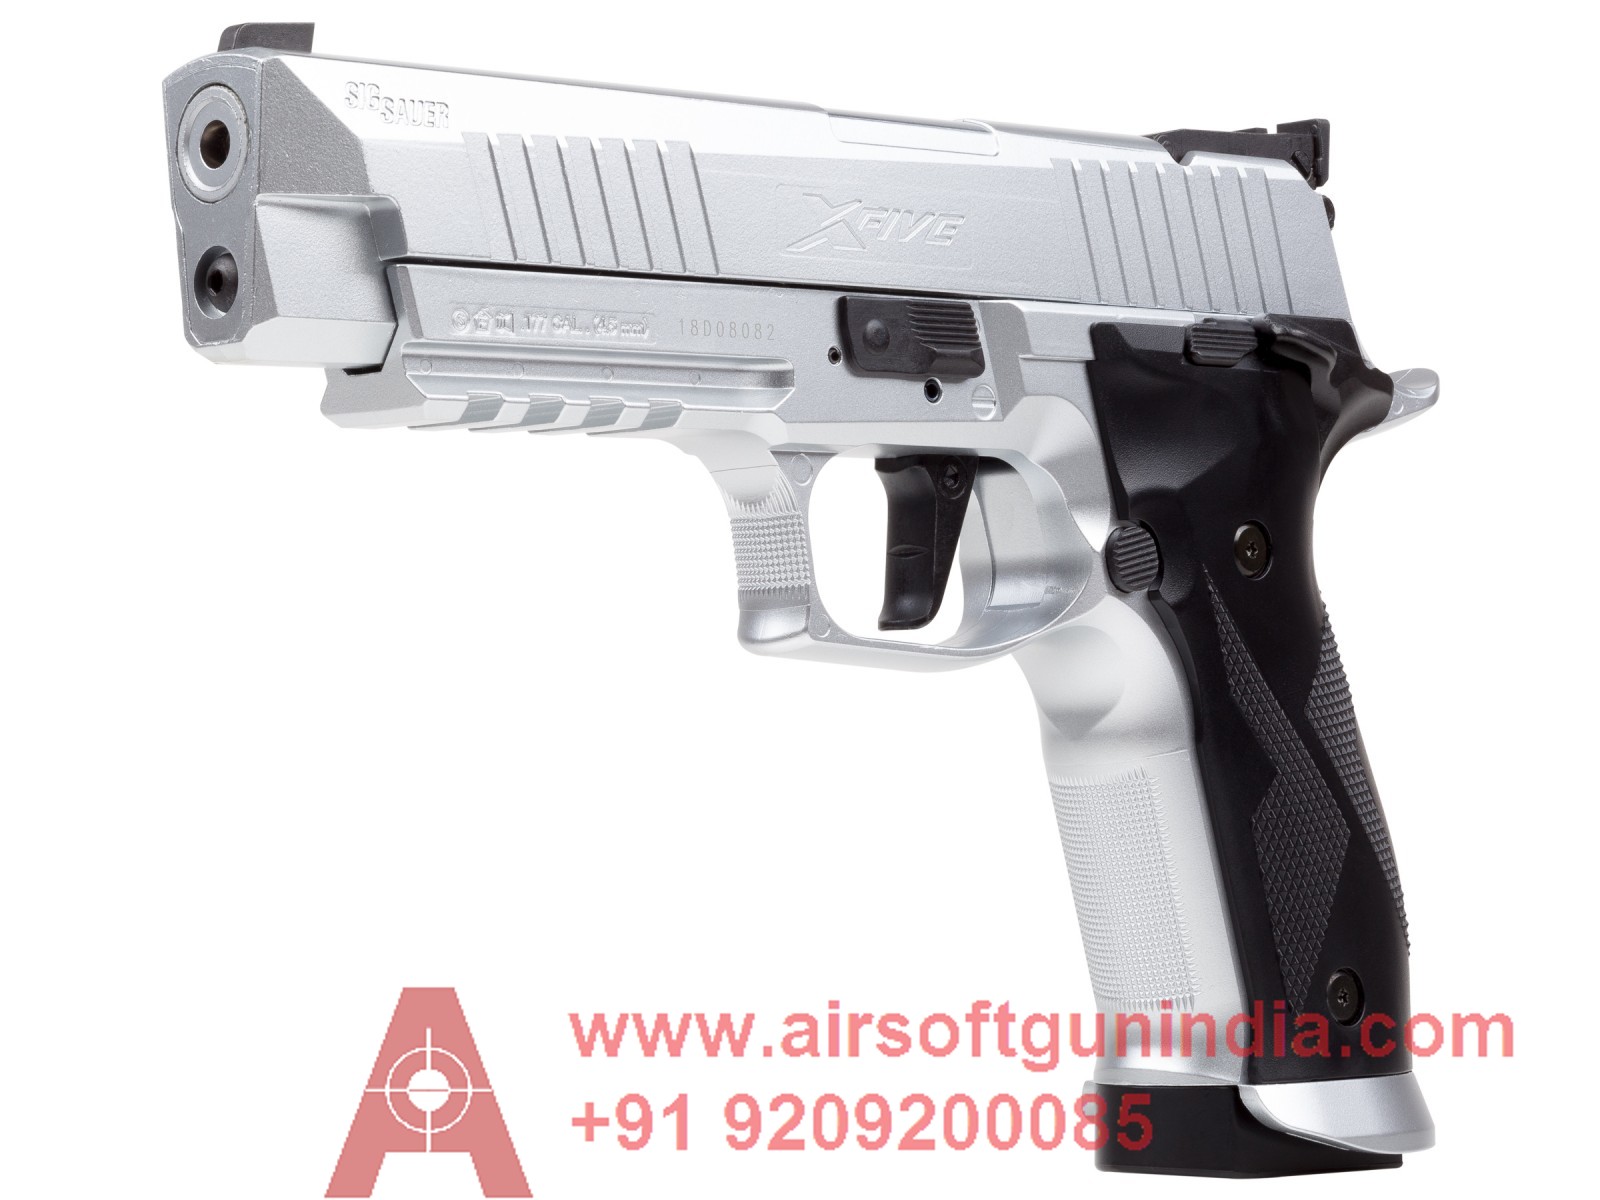 Sig Sauer X-Five ASP CO2 Pellet Pistol, Silver By Airsoft Gun India